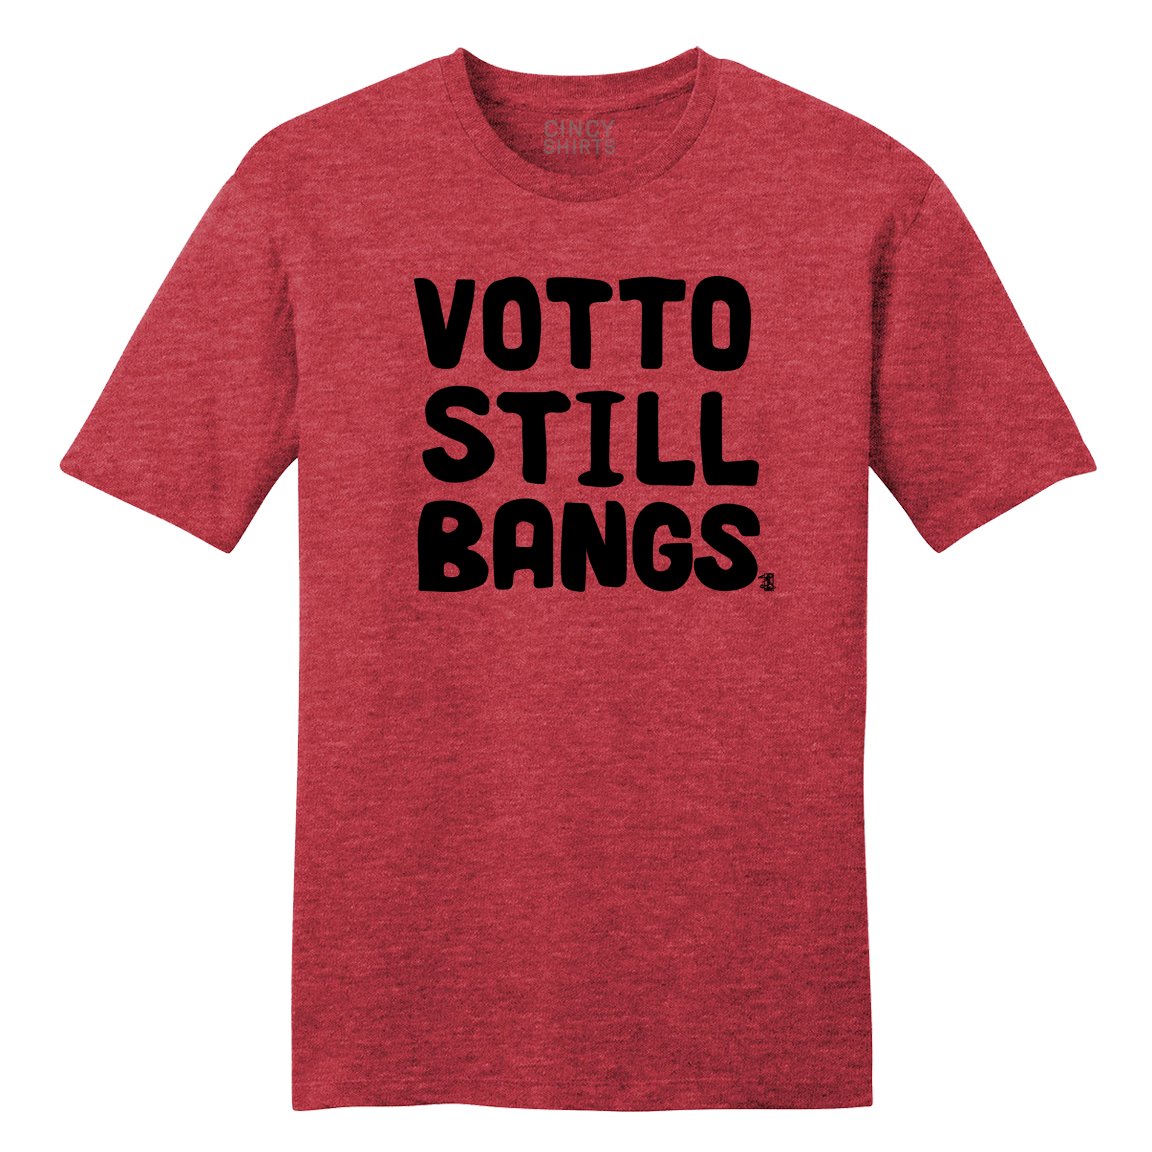 Votto Still Cincy Shirts Bangs 